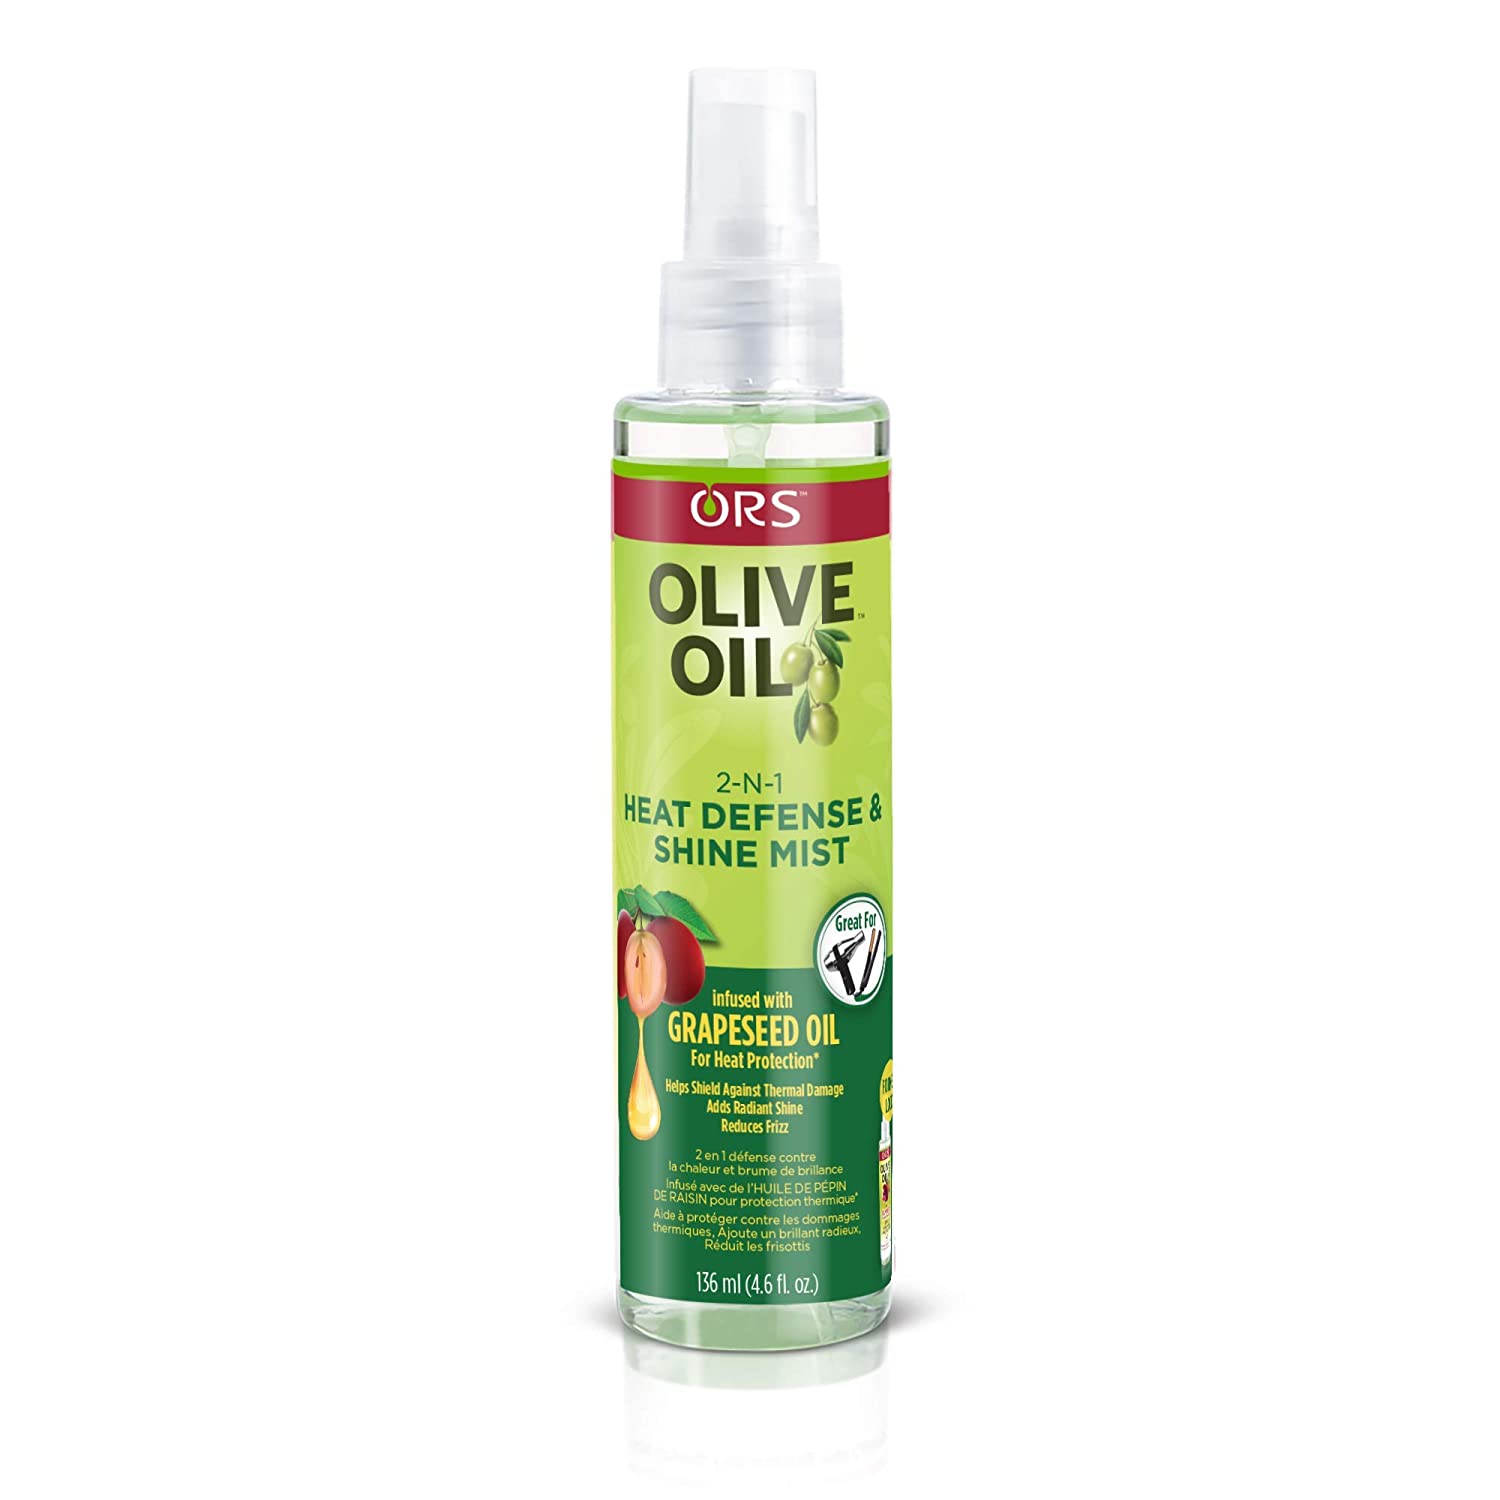 Ors Olive Oil 2N1 Shine Mist & Heat Defense 4.6oz. - Dolly Beauty 